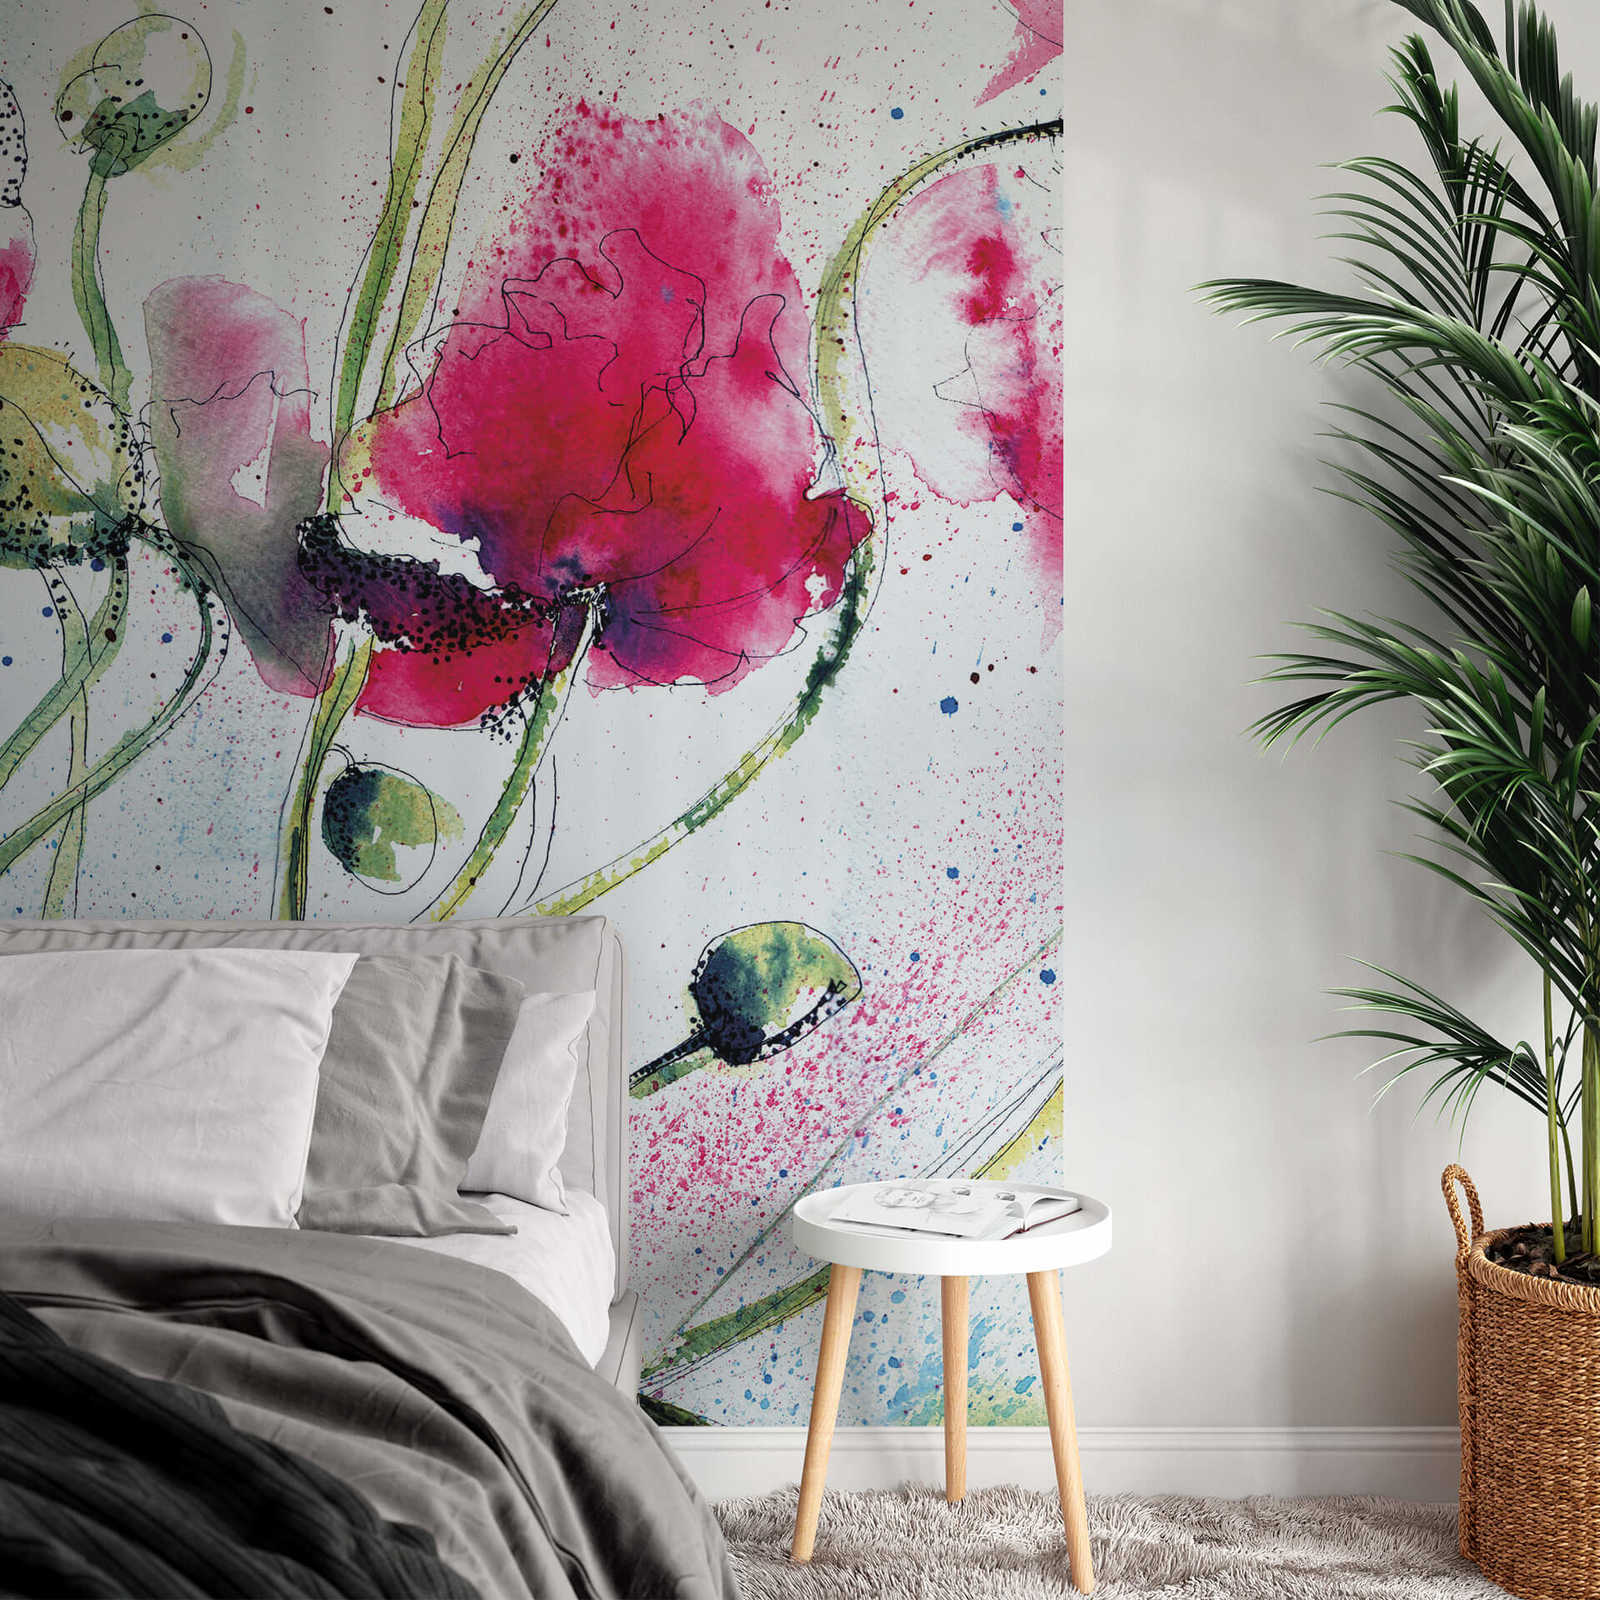             Photo wallpaper narrow drawn flowers - Colorful
        